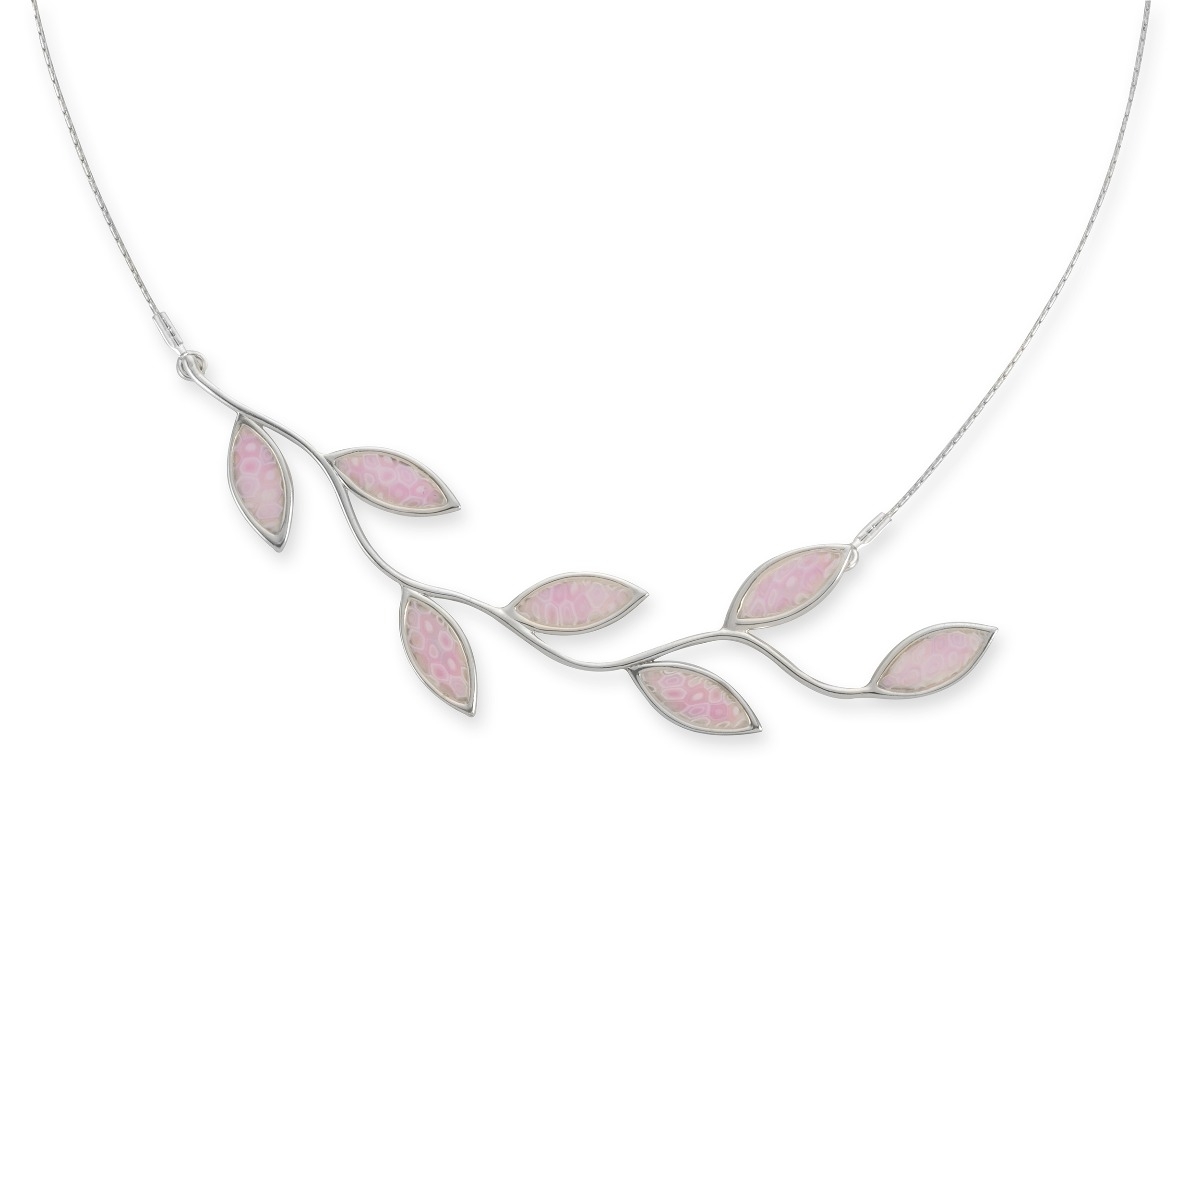 Adina Plastelina 925 Sterling Silver Olive Branch Necklace – Rose Quartz - 1